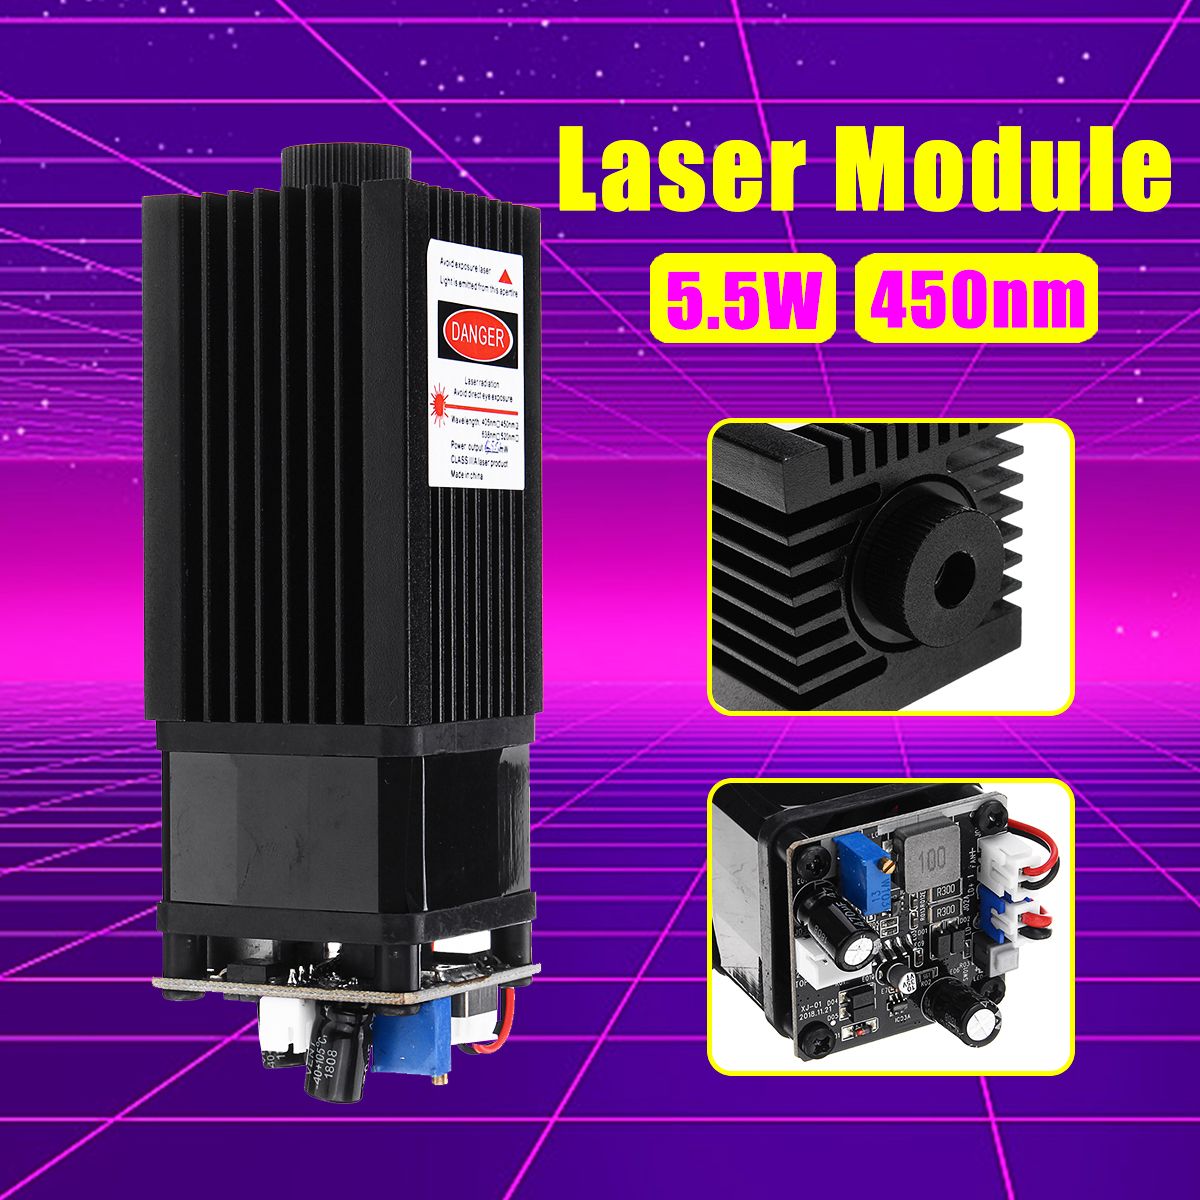 55W-450nm-Blue-Laser-Module-Kit-Foucusable-DIY-Laser-Engraver-Head-Part-for-Laser-Engraving-Machine-1653903